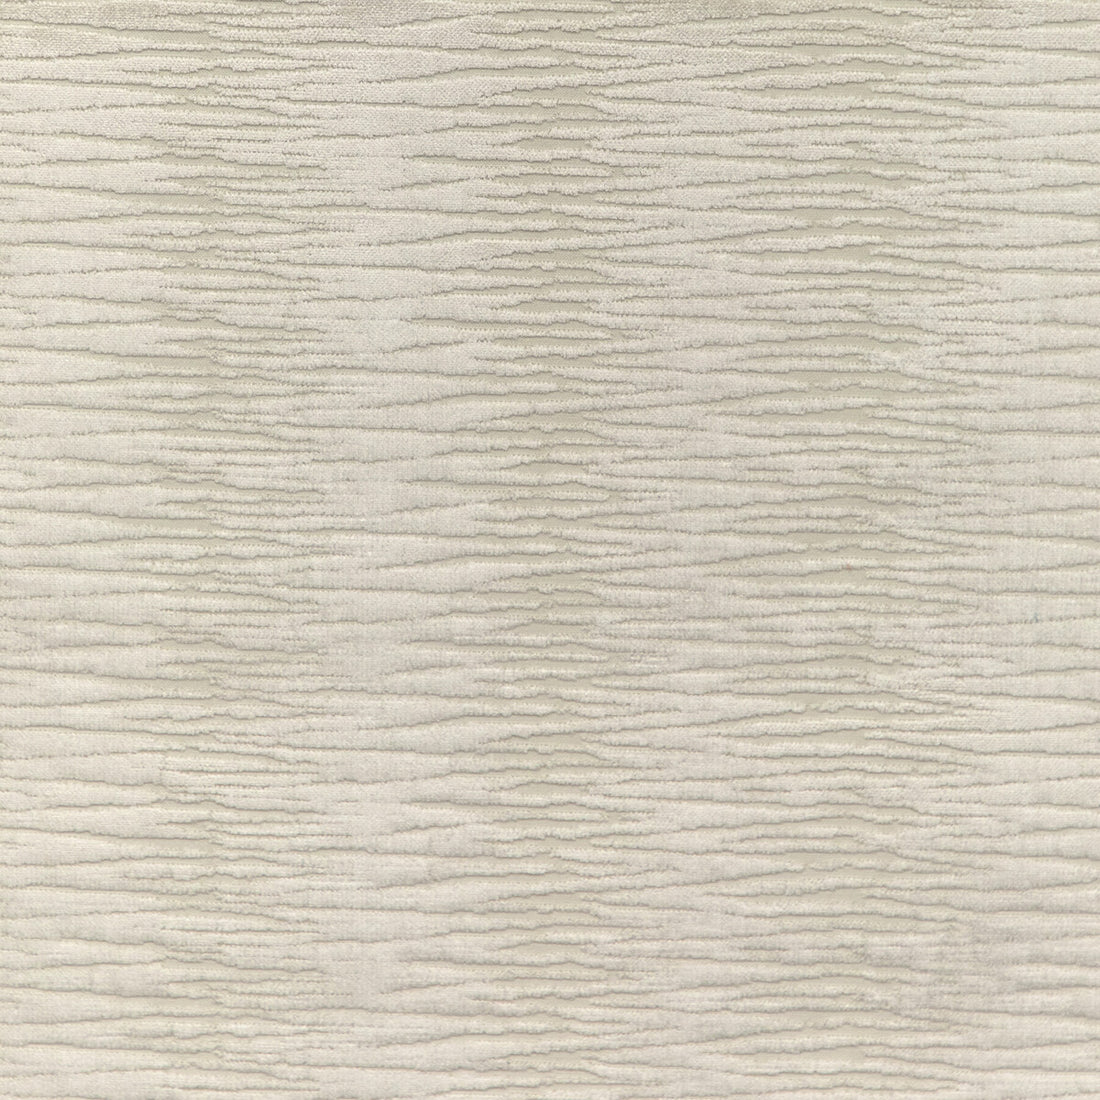 Kravet Design fabric in 37008-1 color - pattern 37008.1.0 - by Kravet Design in the Modern Velvets collection